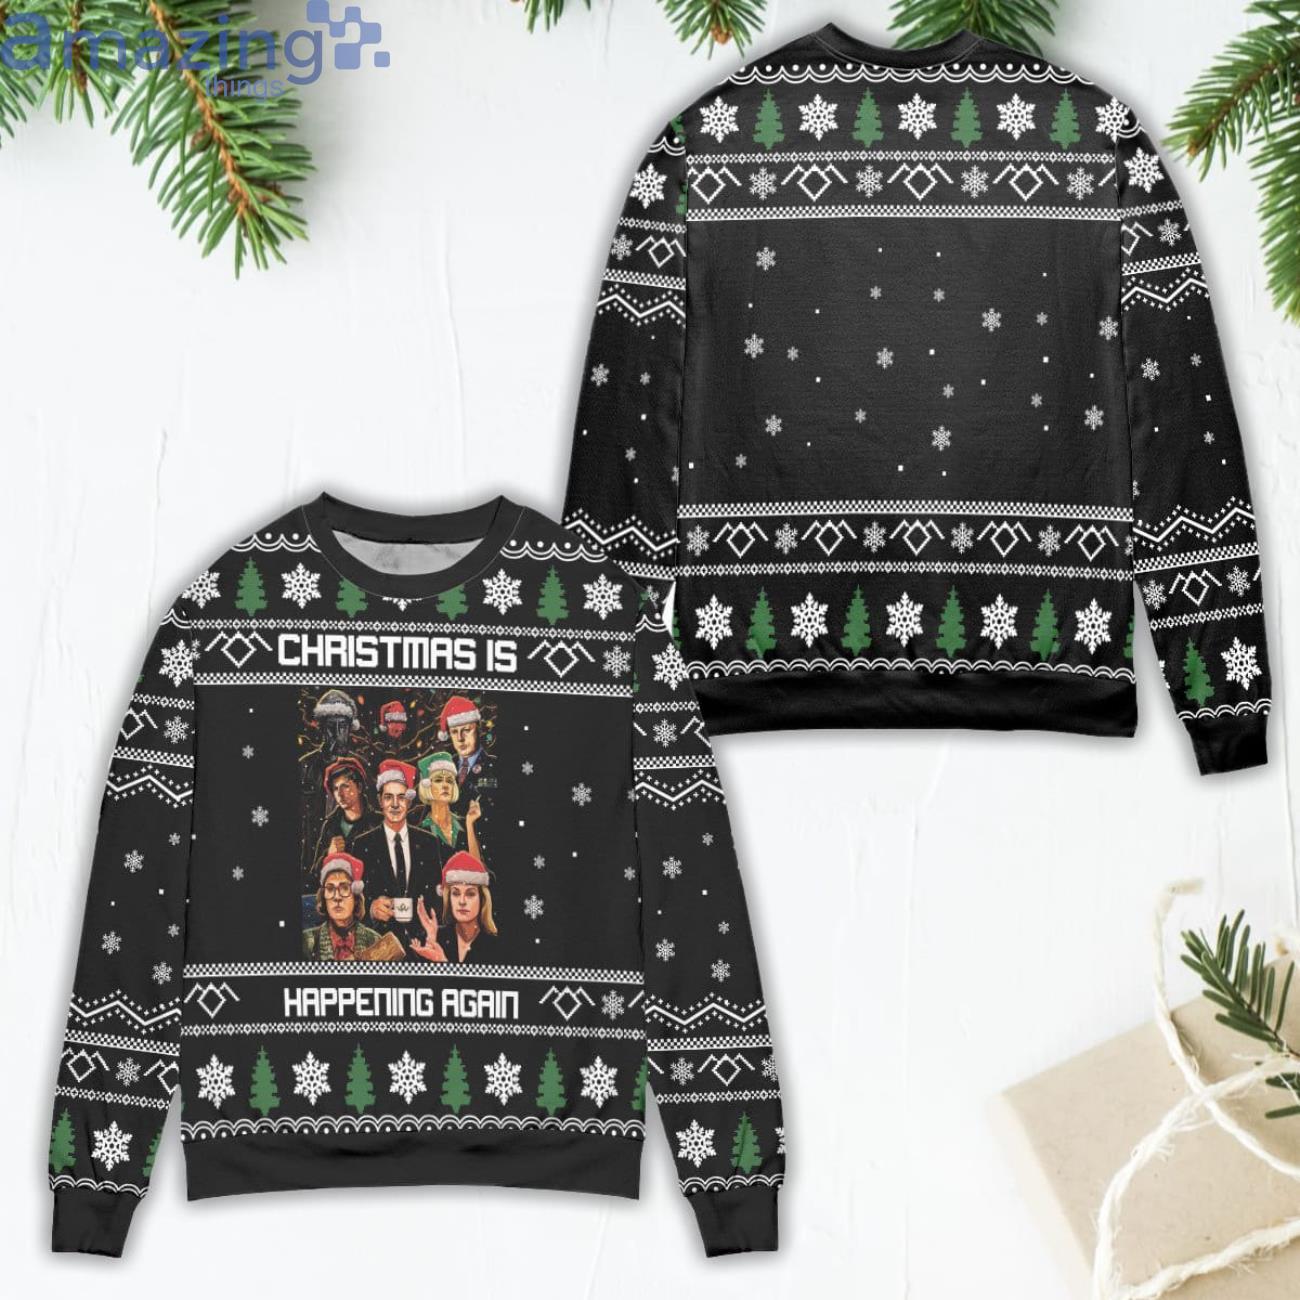 Twin Peaks Christmas is Again Snowflake Pattern Ugly Christmas Sweater